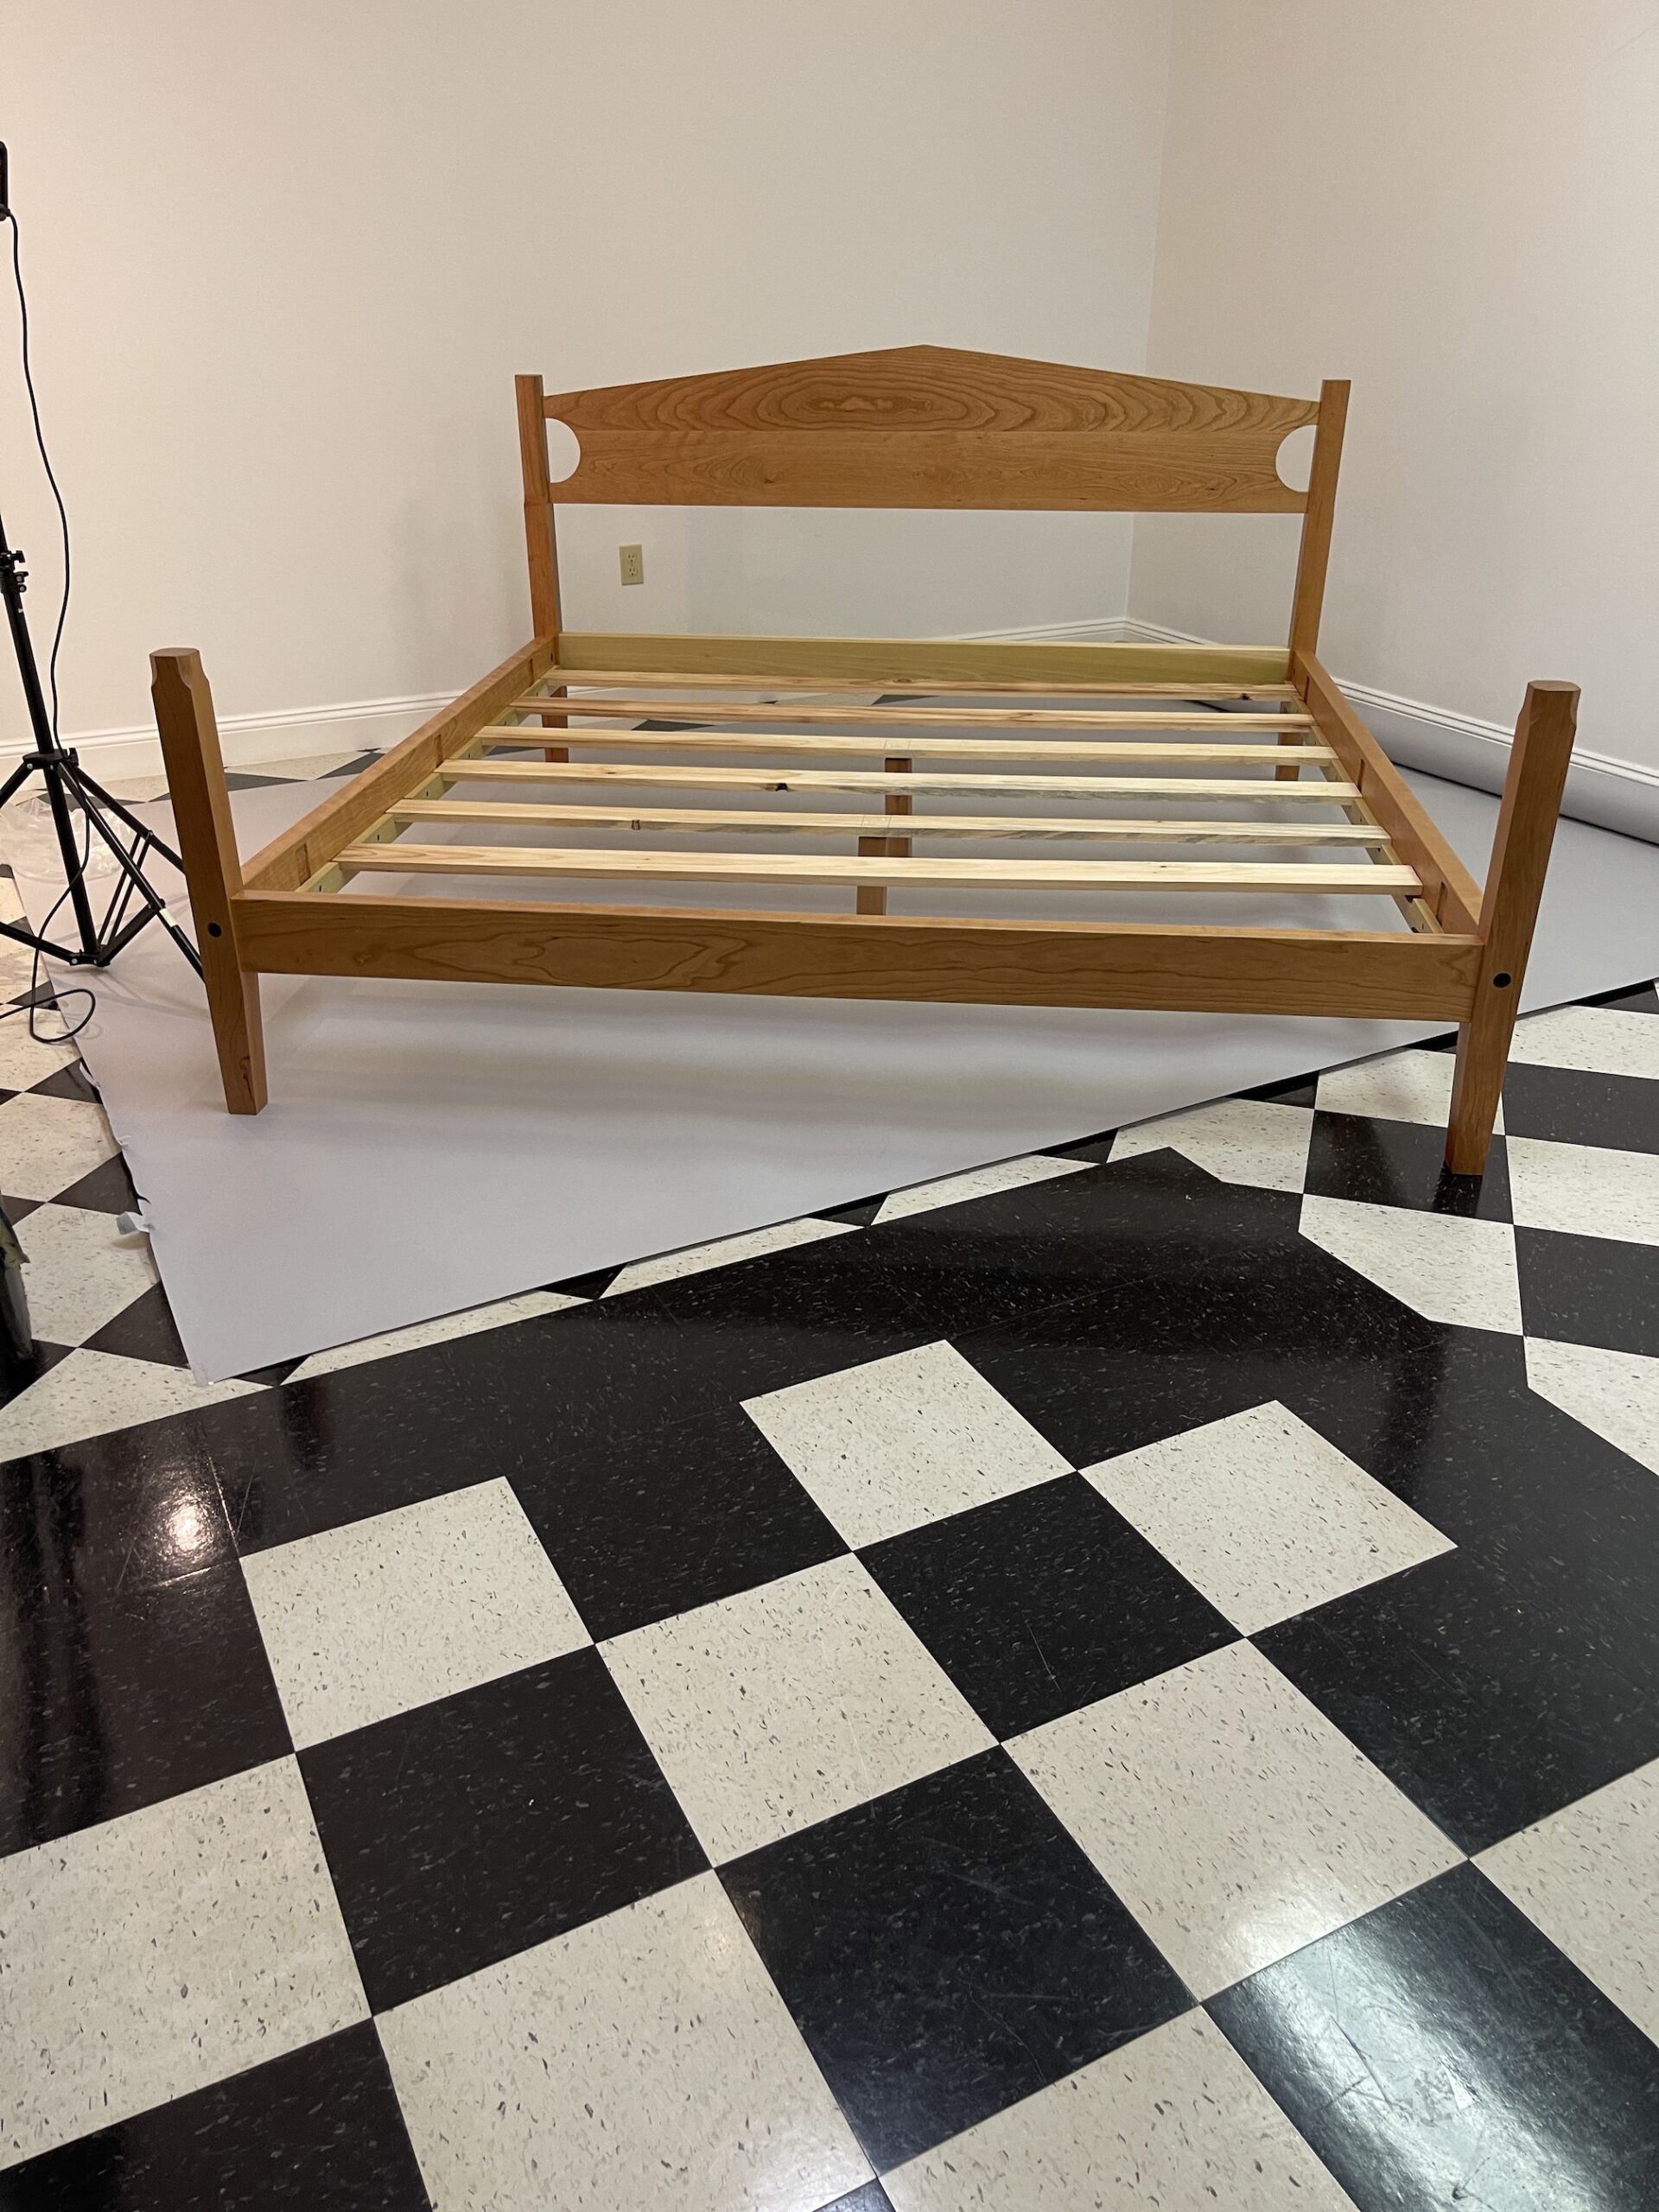 New Model - King Size Shaker Bed A - Shaker - Designer Series - Natural Finish Image